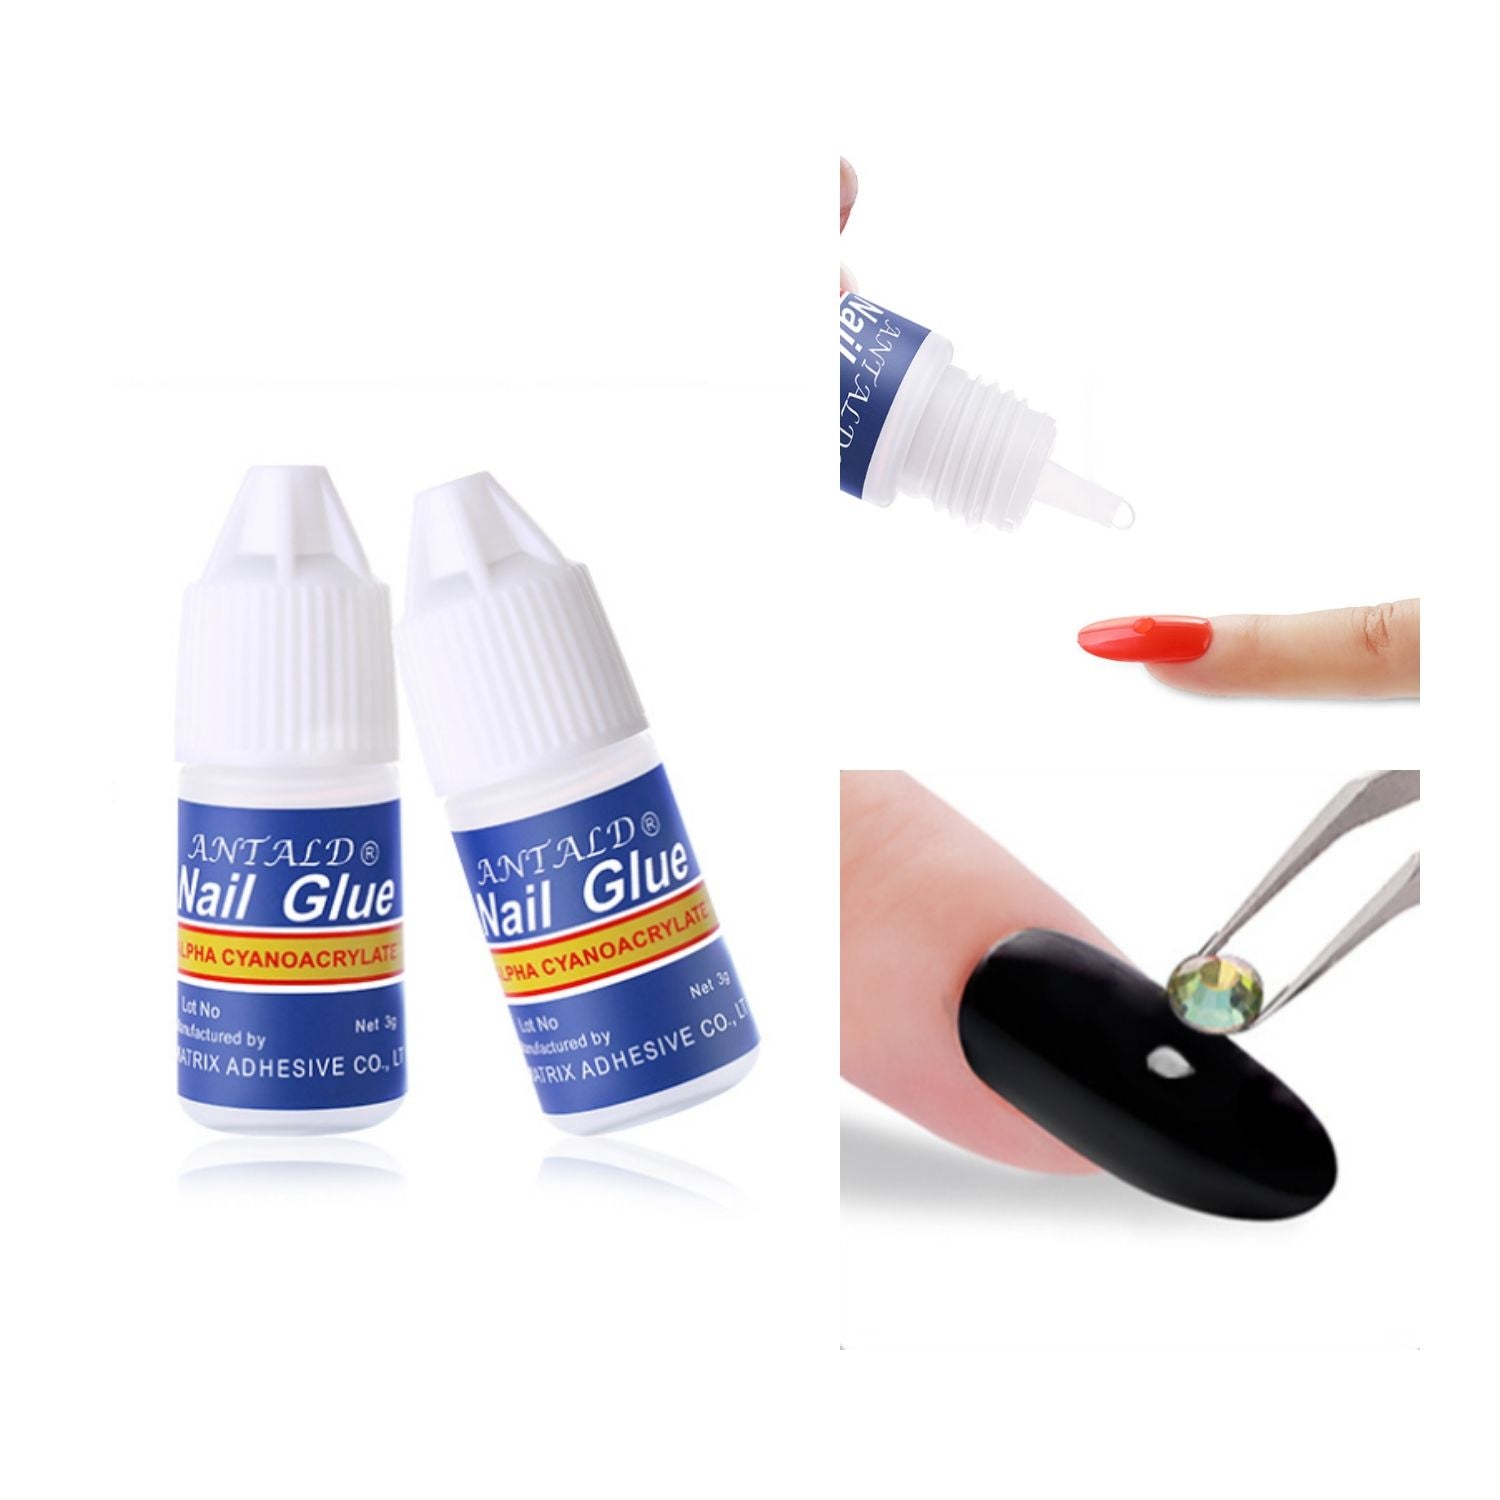 Glitz Accessories & Such iHold Condensed Glue Gel, Rhinestone Glue for Nails,  Bling Adhesive Nail Art Glue, Super Sticky Gem, Jewelry Manicure Decoration  Gel, DIY Builder Tip, Clear UV LED, 15 ml